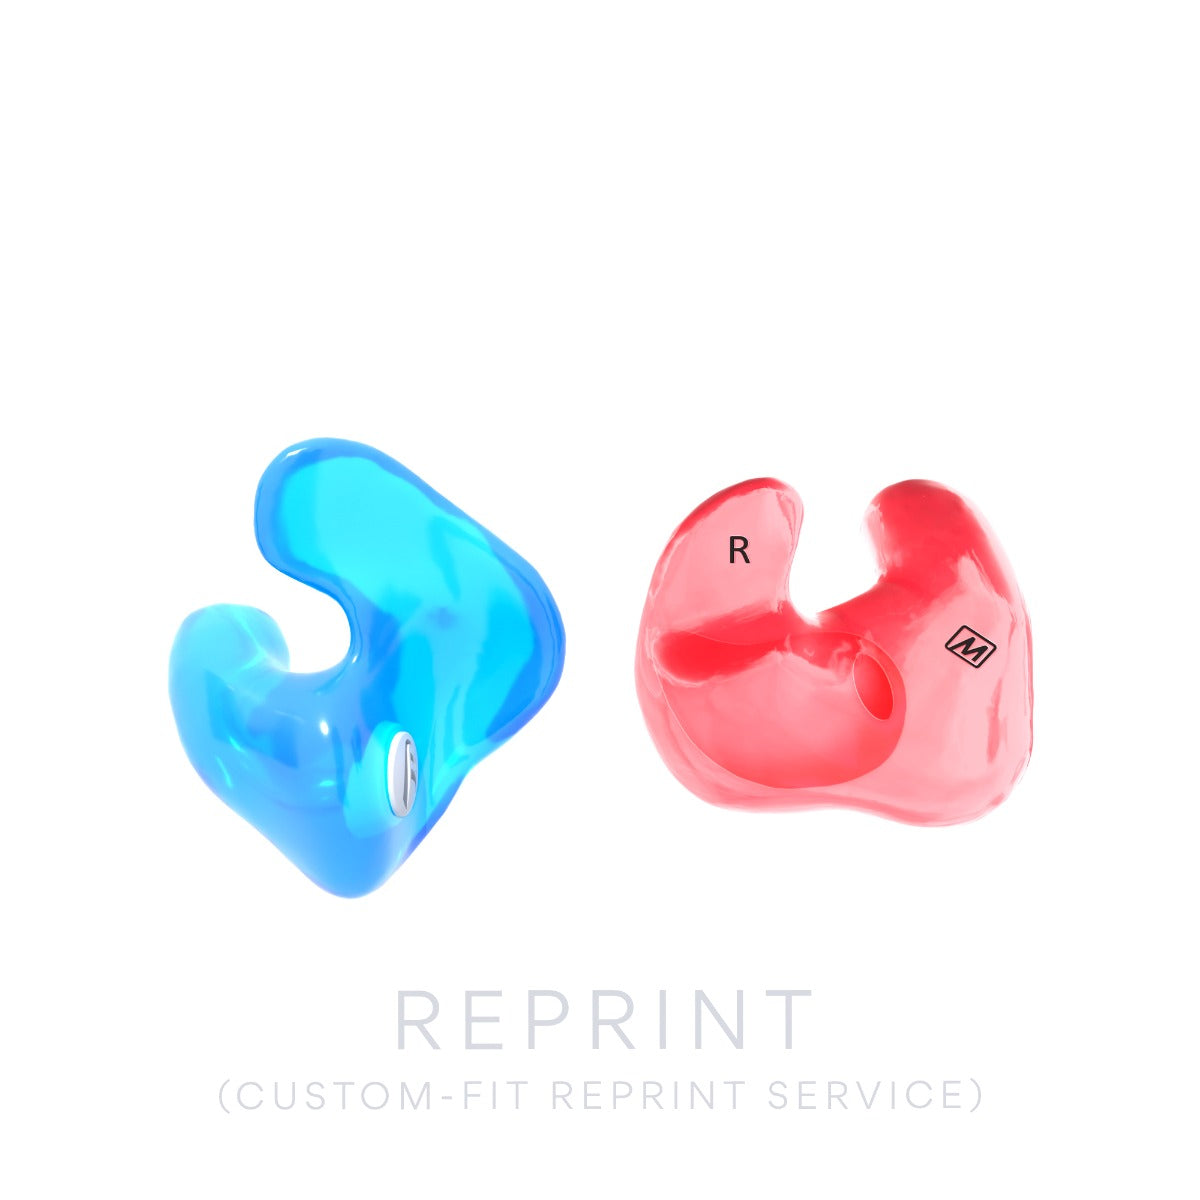 Image of Custom-Fit Earplug / Eartip Reprint Service.